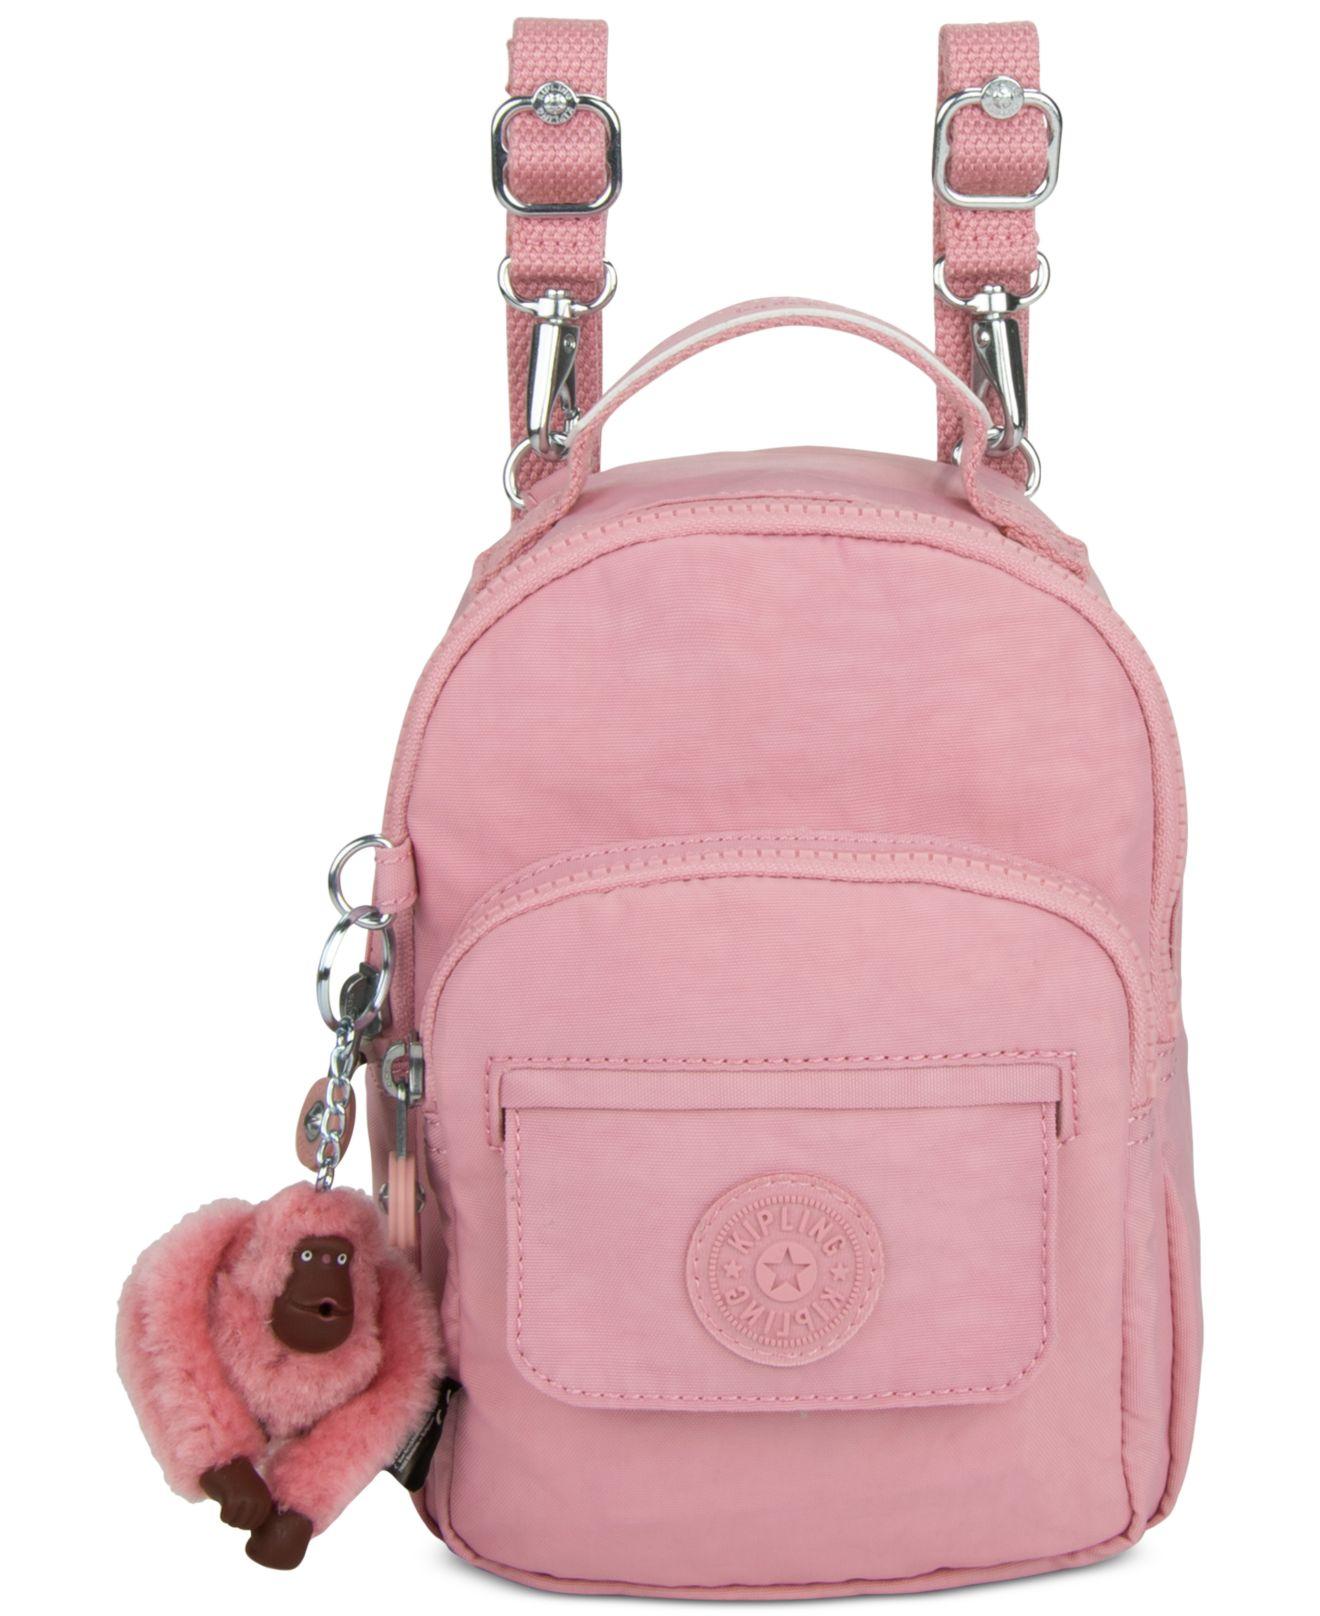 Kipling Alber 3-in-1 Convertible Mini Bag Backpack in Pink | Lyst Canada